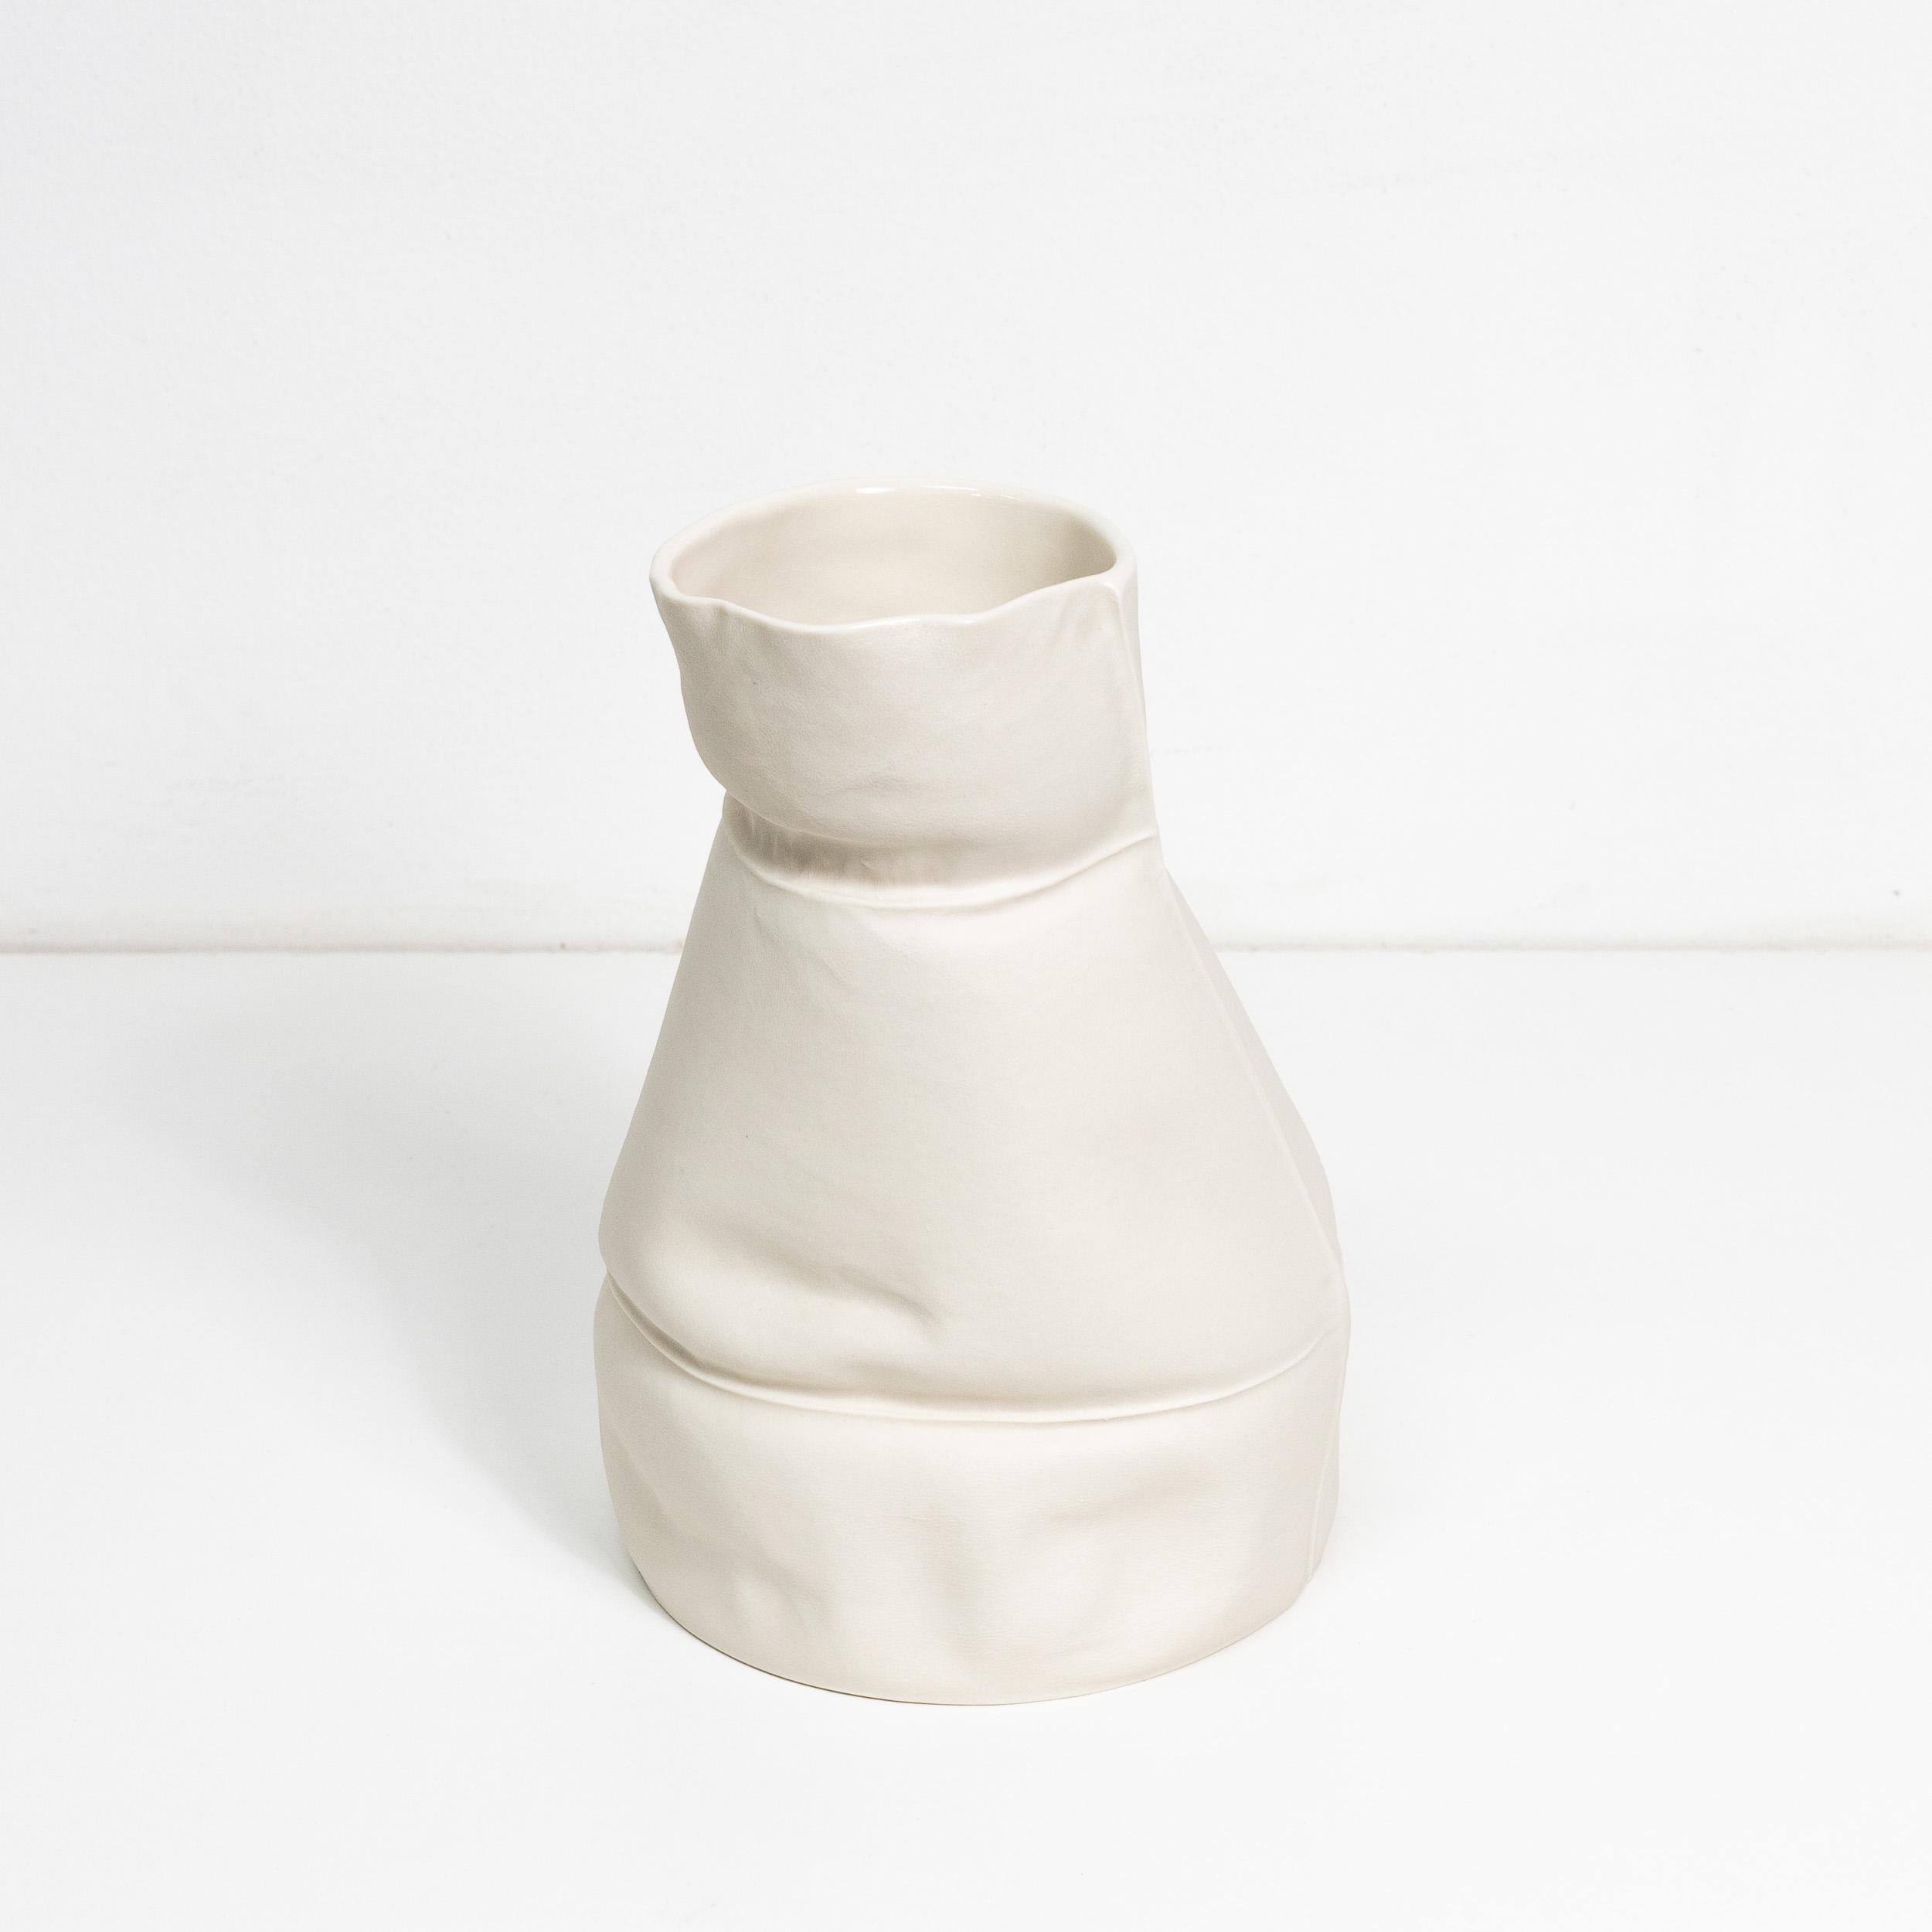 American Organic White Ceramic Kawa Vase #16, Leather-Cast Porcelain Flower Vessel For Sale